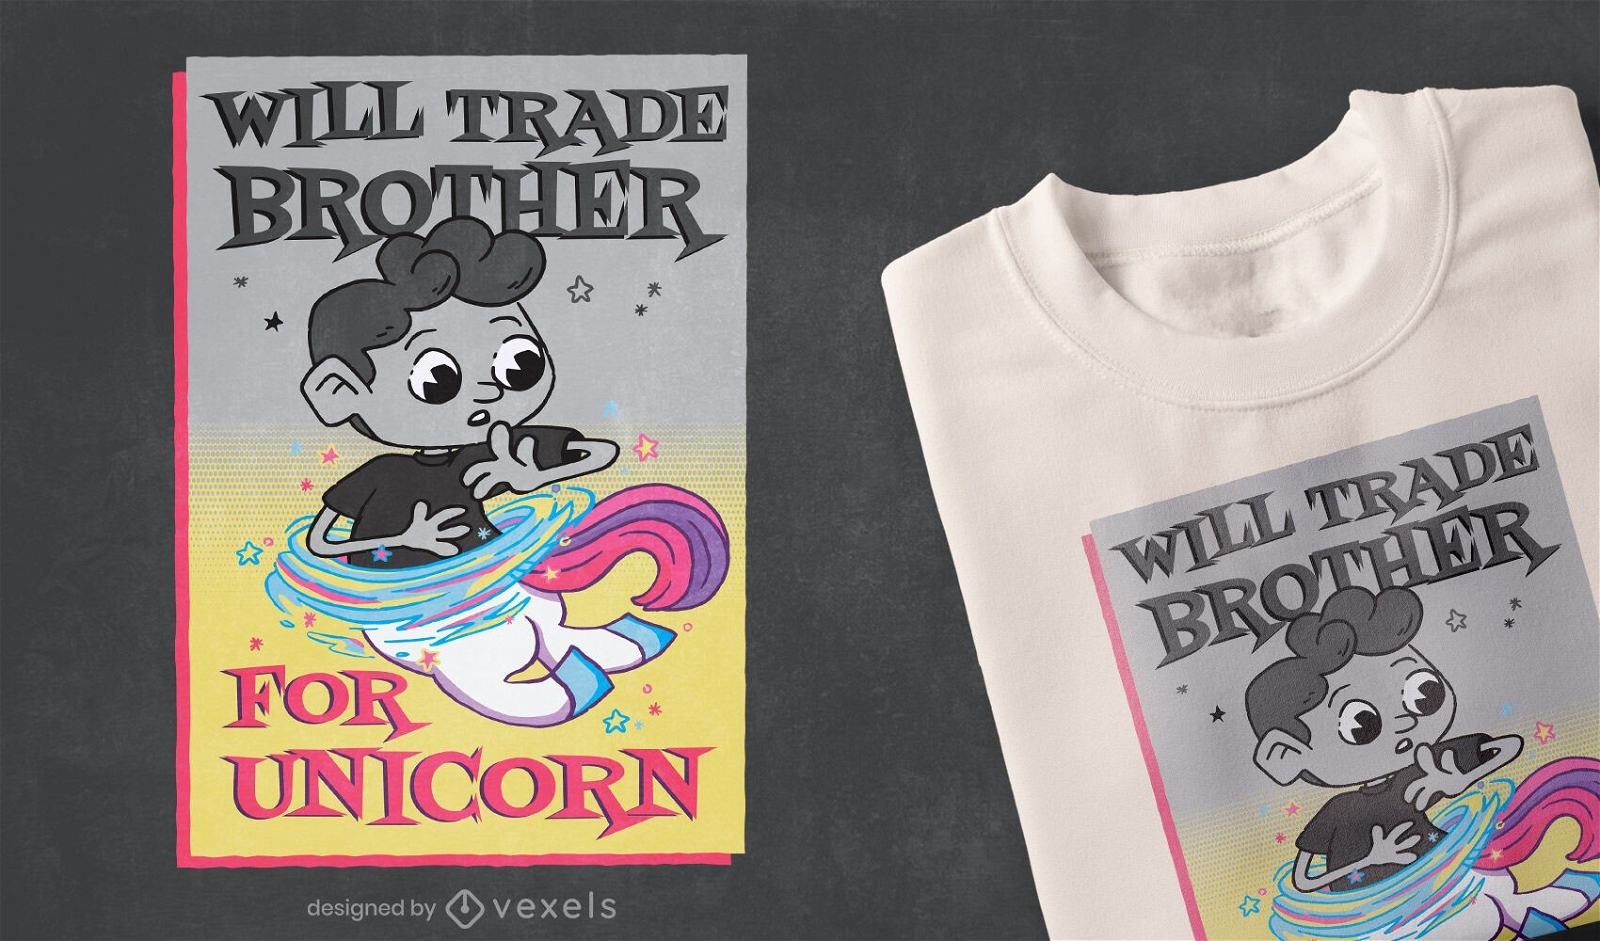 Trade brother t-shirt design